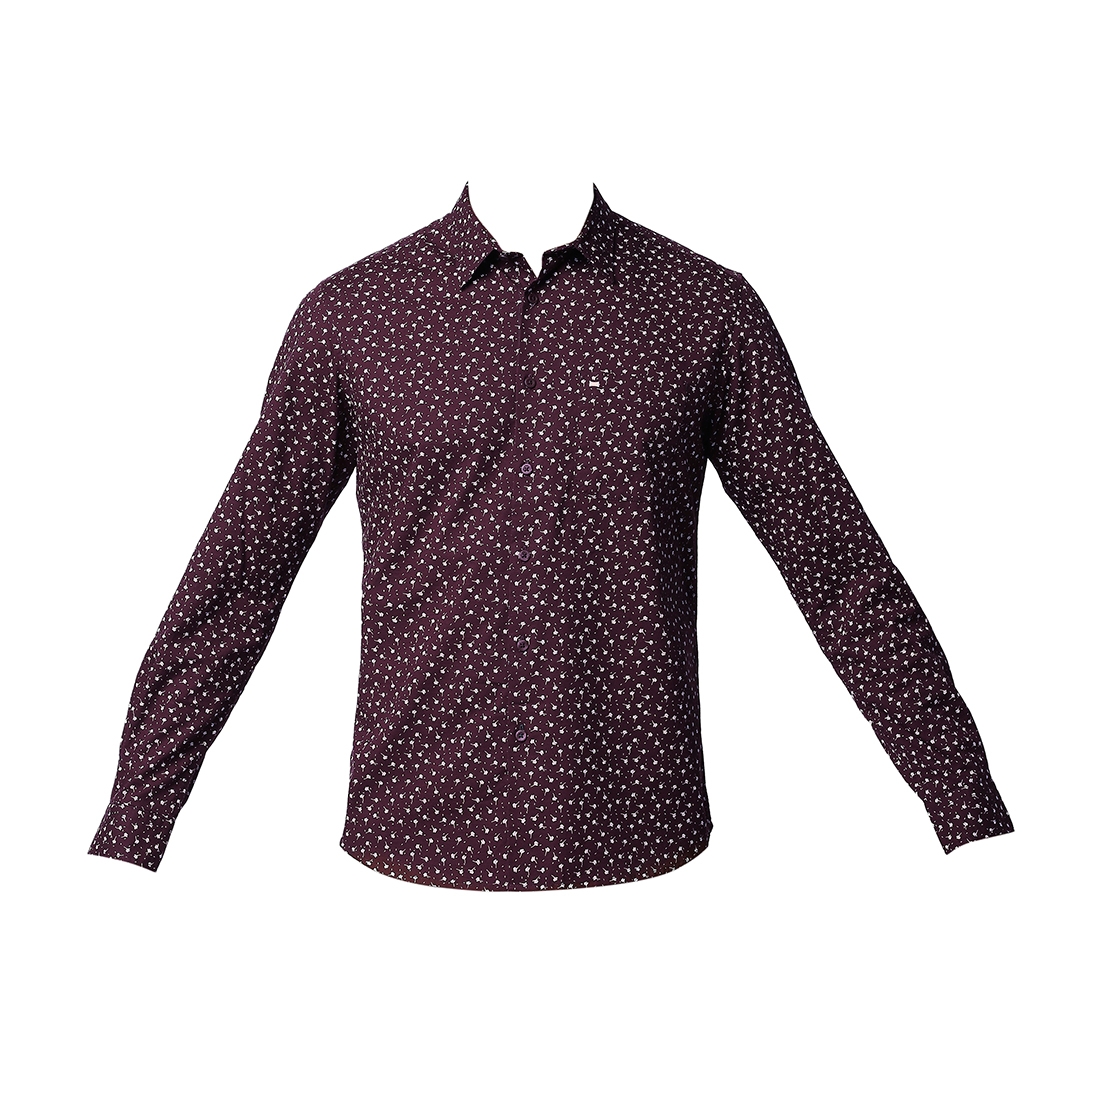 Basics | Men's Red Cotton Printed Casual Shirt 5